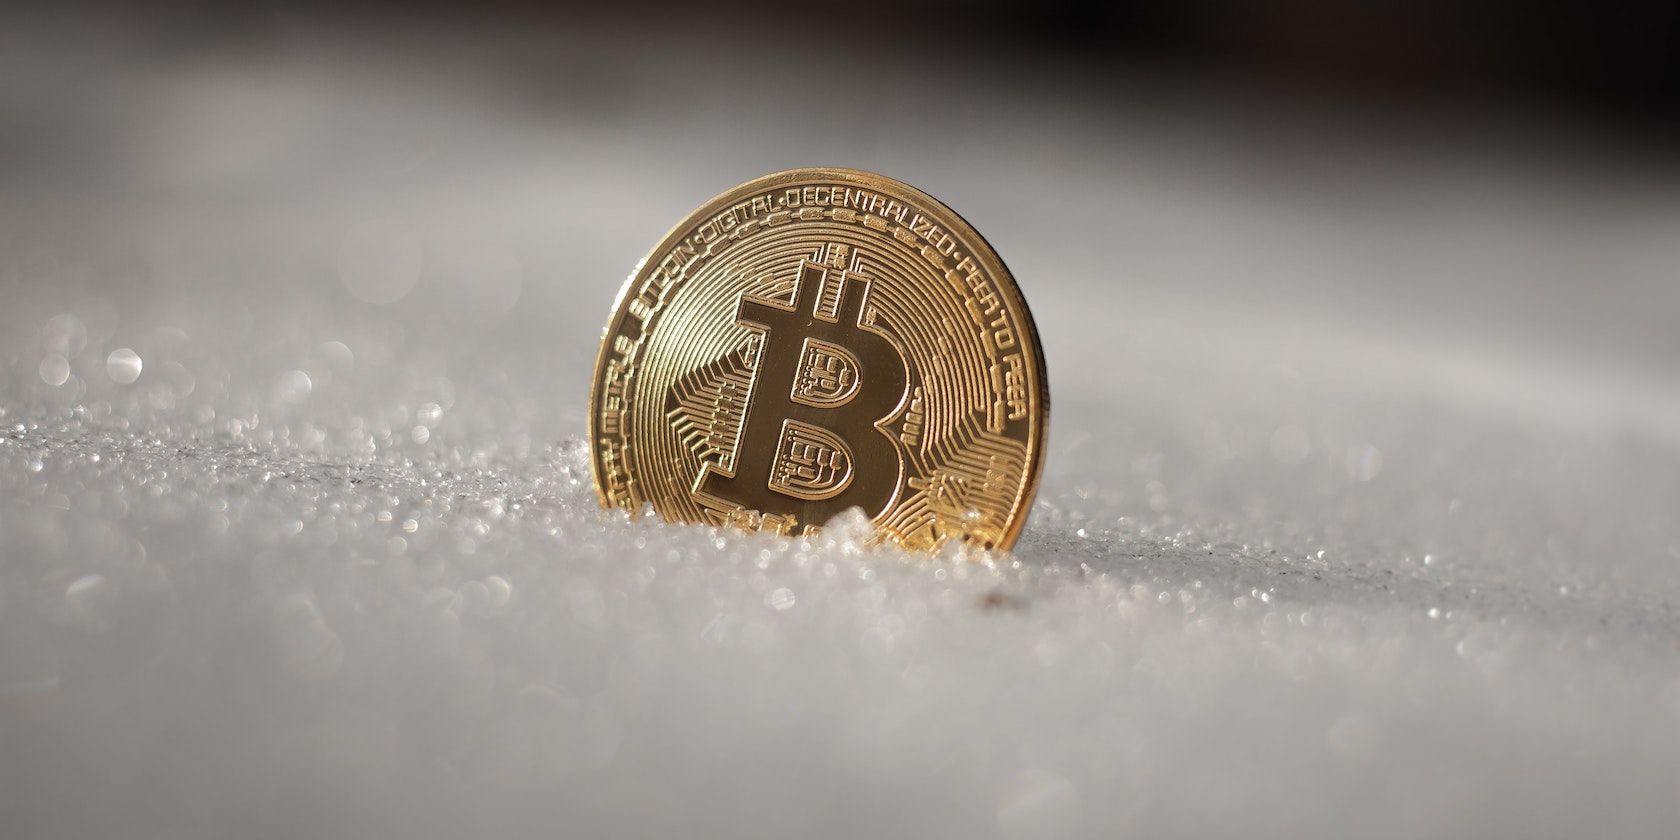 Bitcoin stuck in snow illustrating 